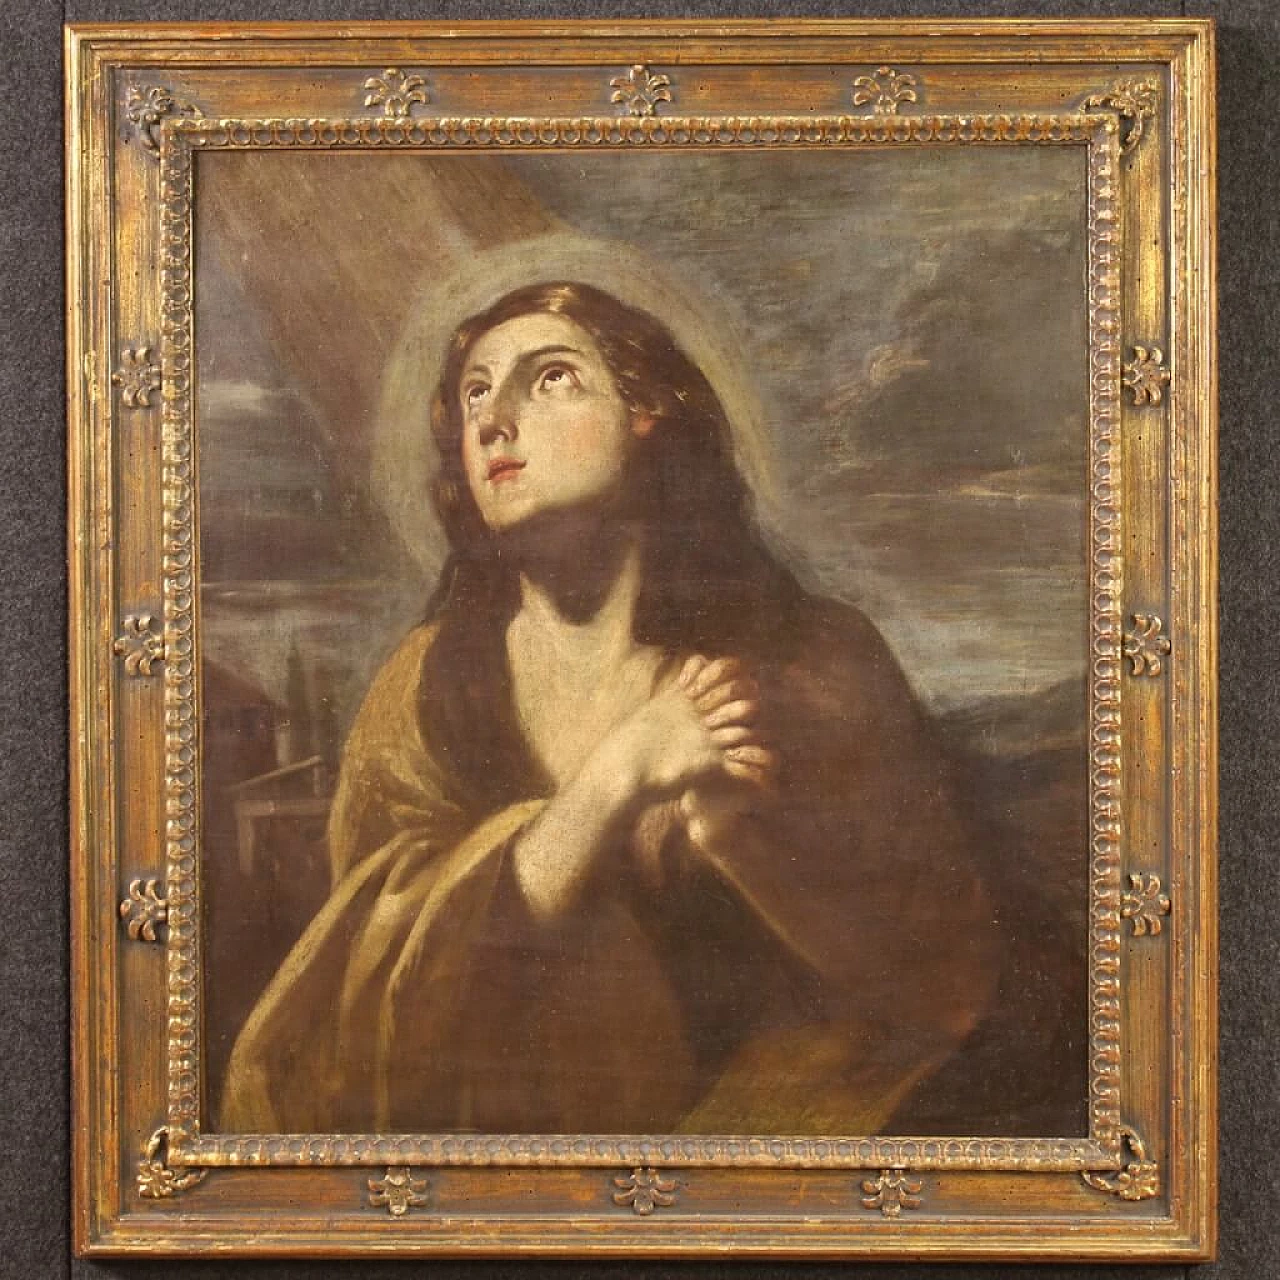 Maddalena, dipinto olio su tela con cornice dorata, tardo '600 2